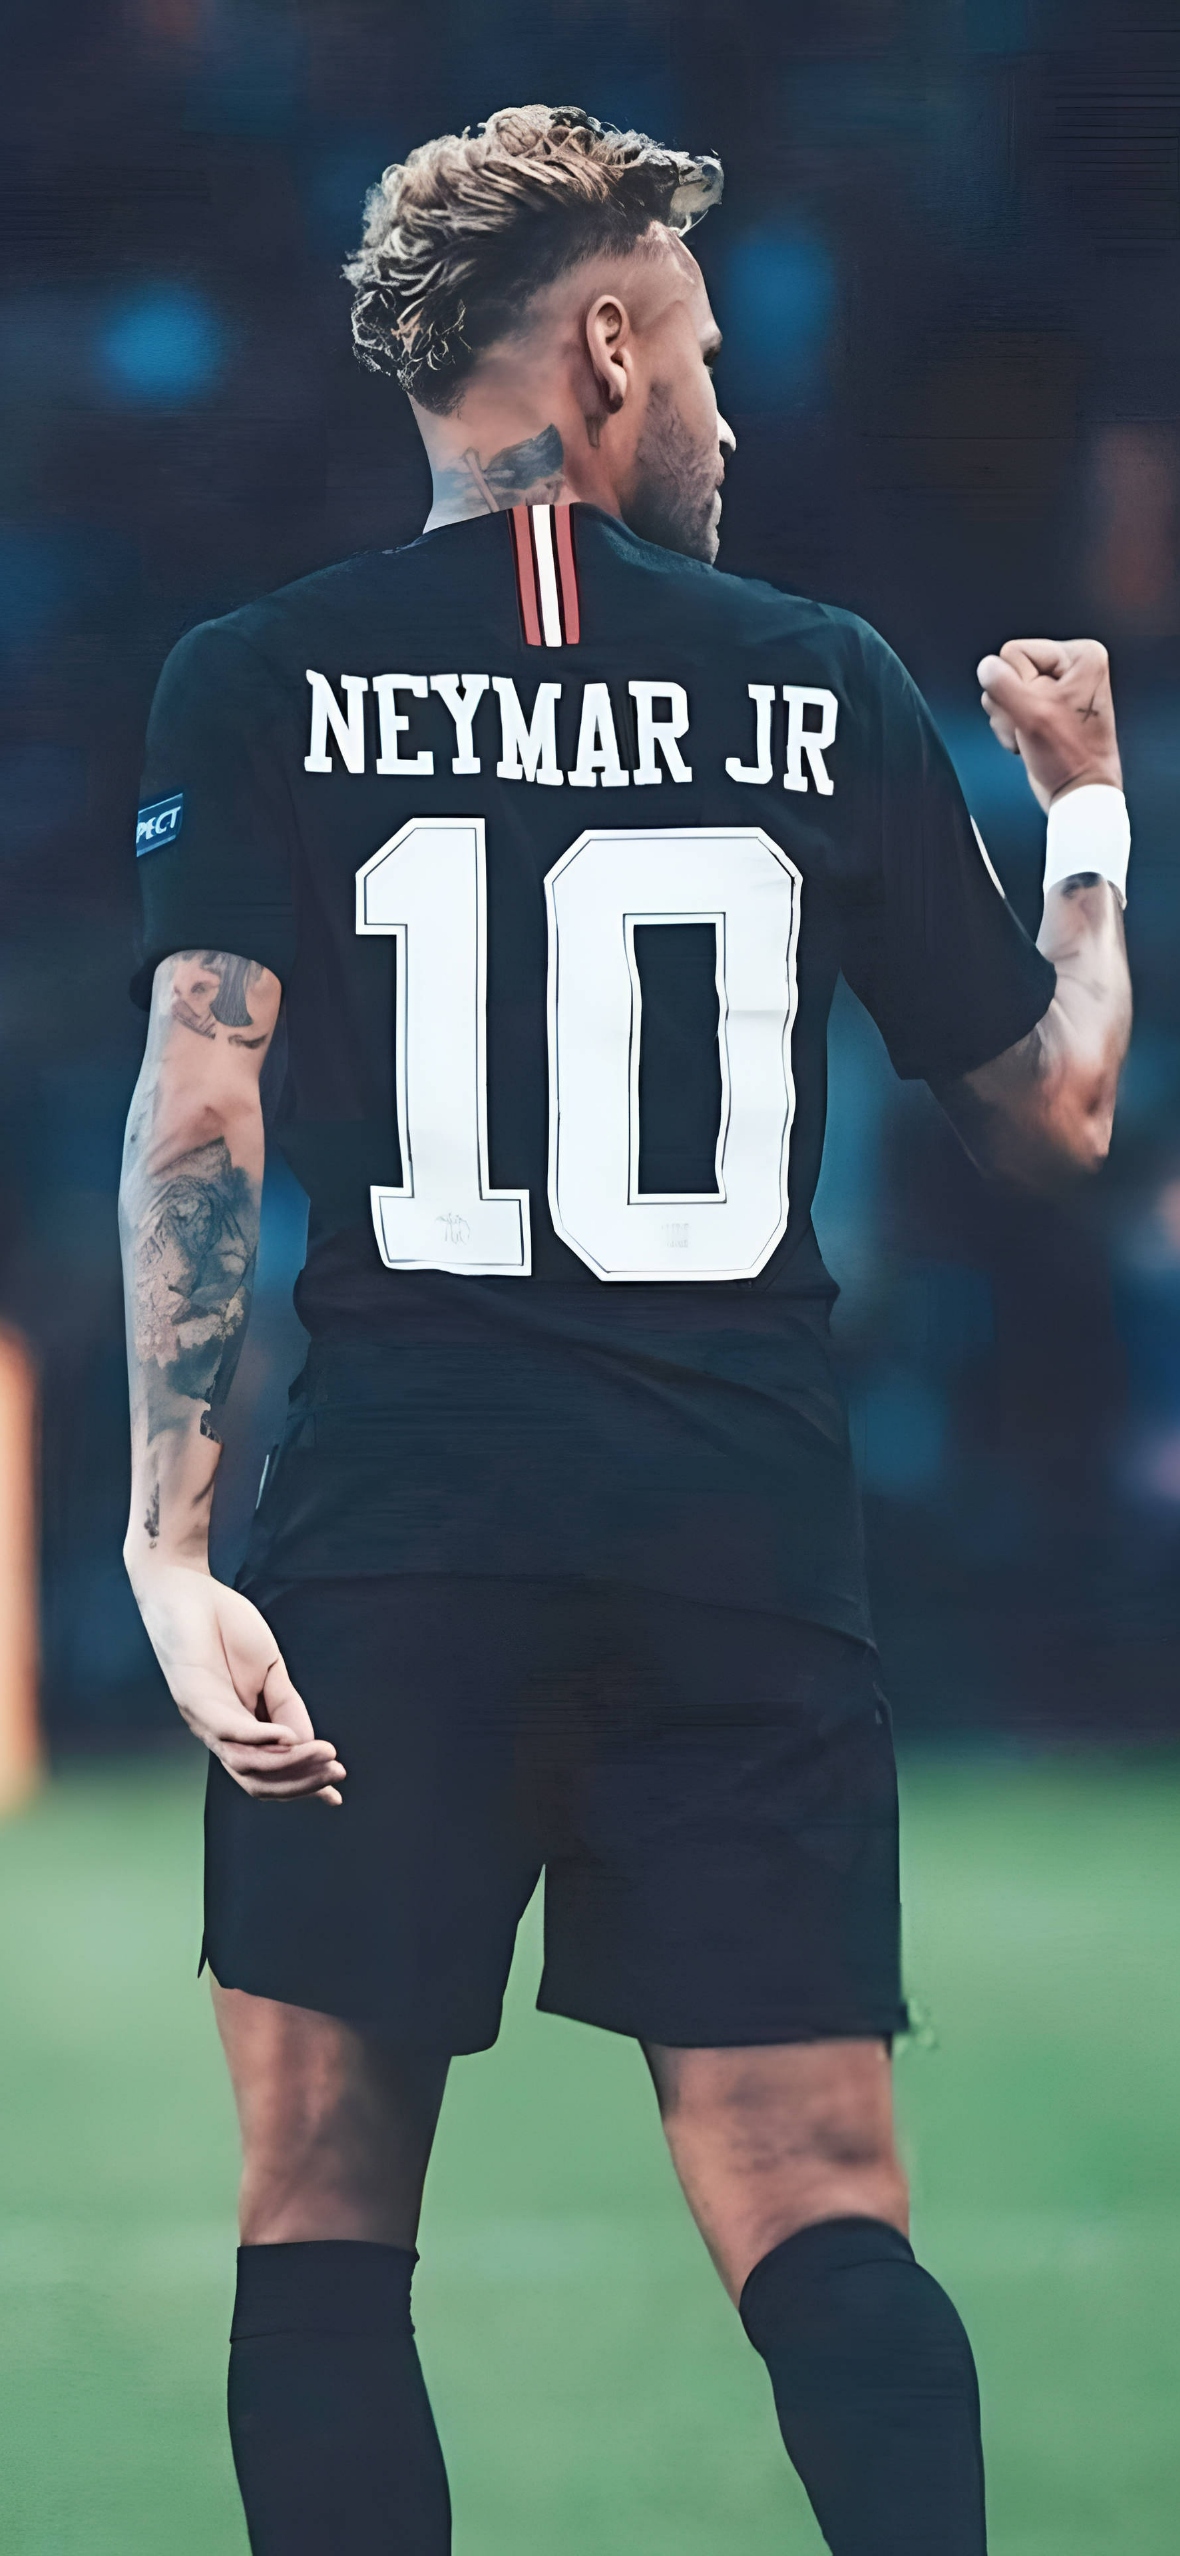 Neymar Jr Wallpaper For iPhone